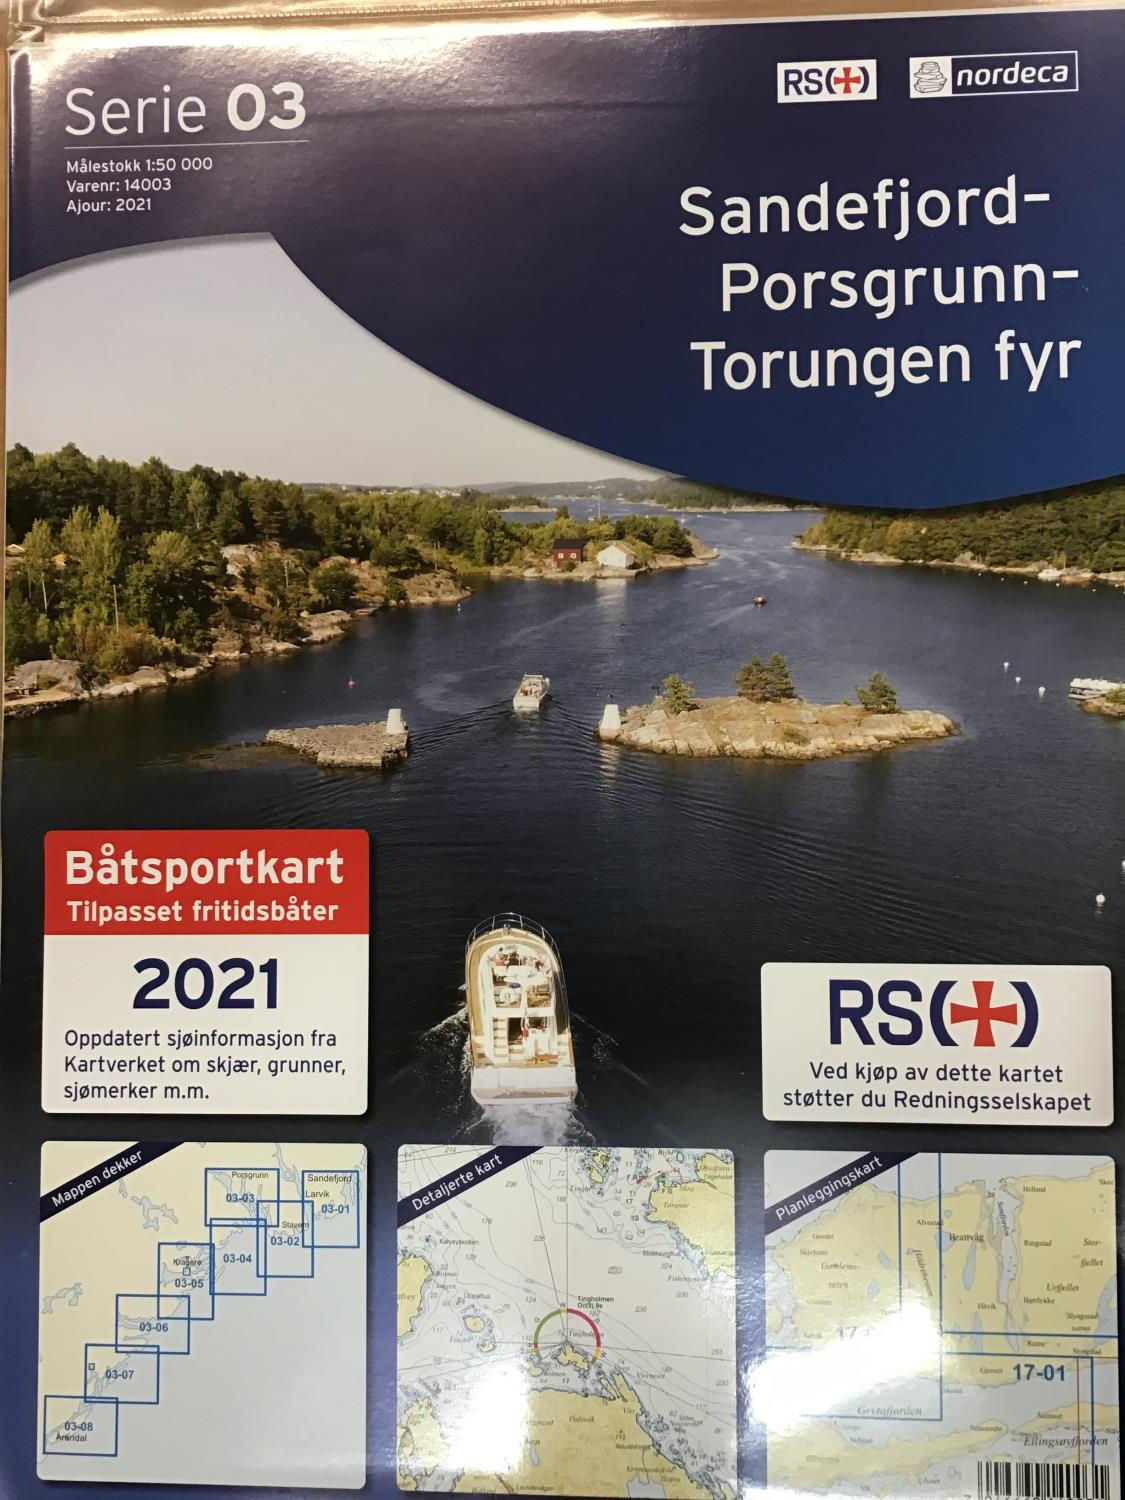 03 Sandefjord-Porsgrunn-Torungen fyr